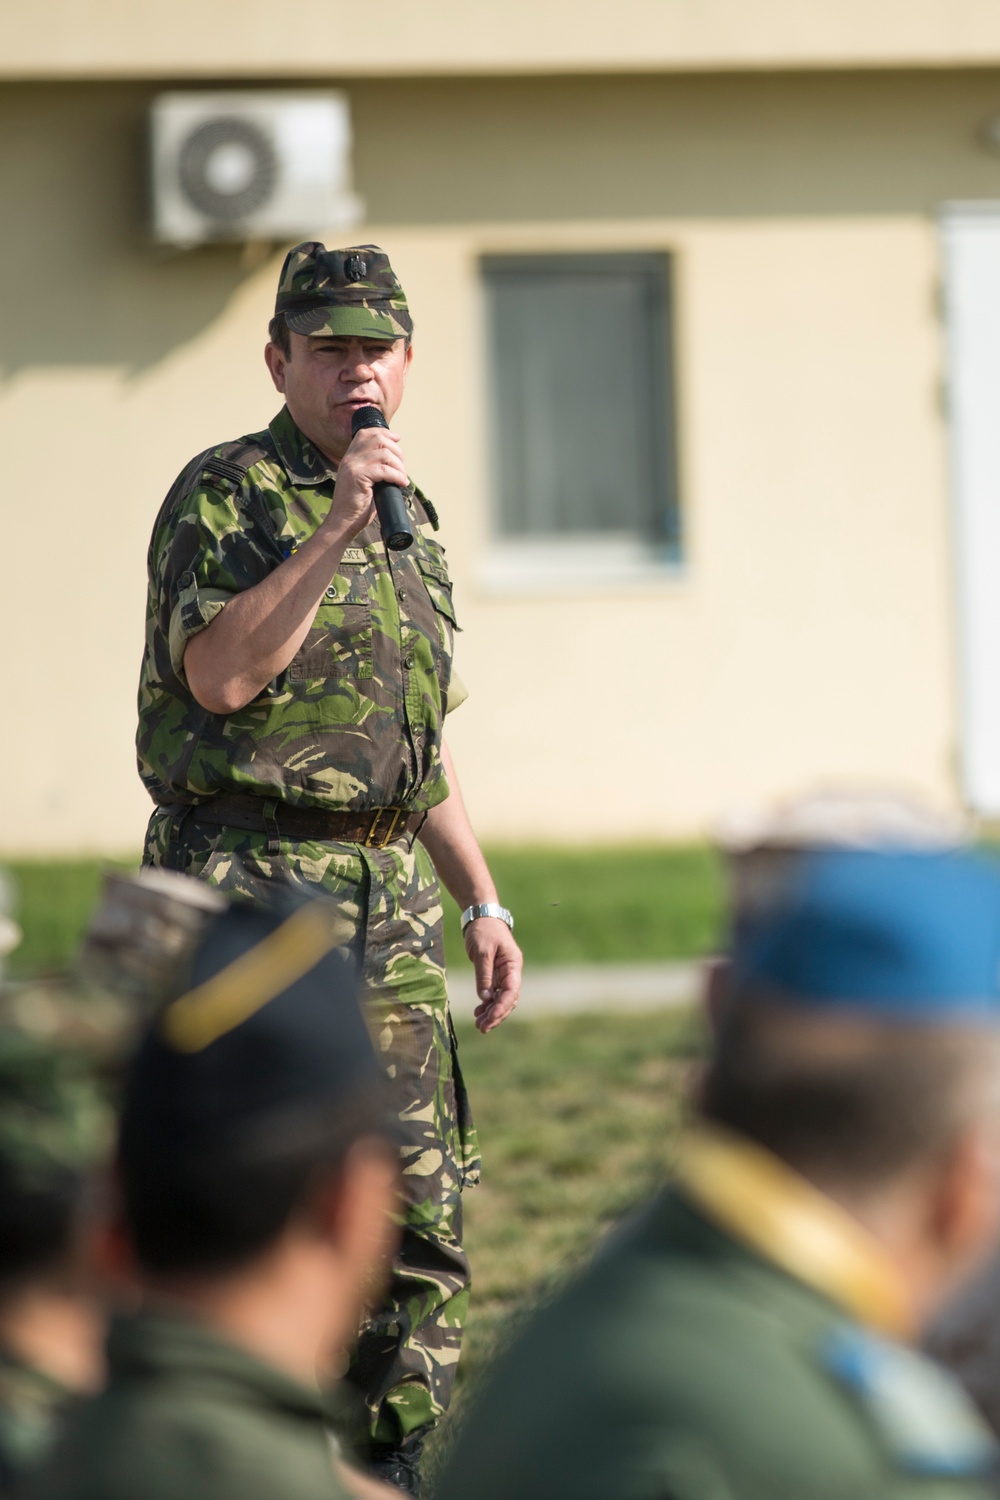 Black Sea Rotational Force 14 kicks off with ceremony